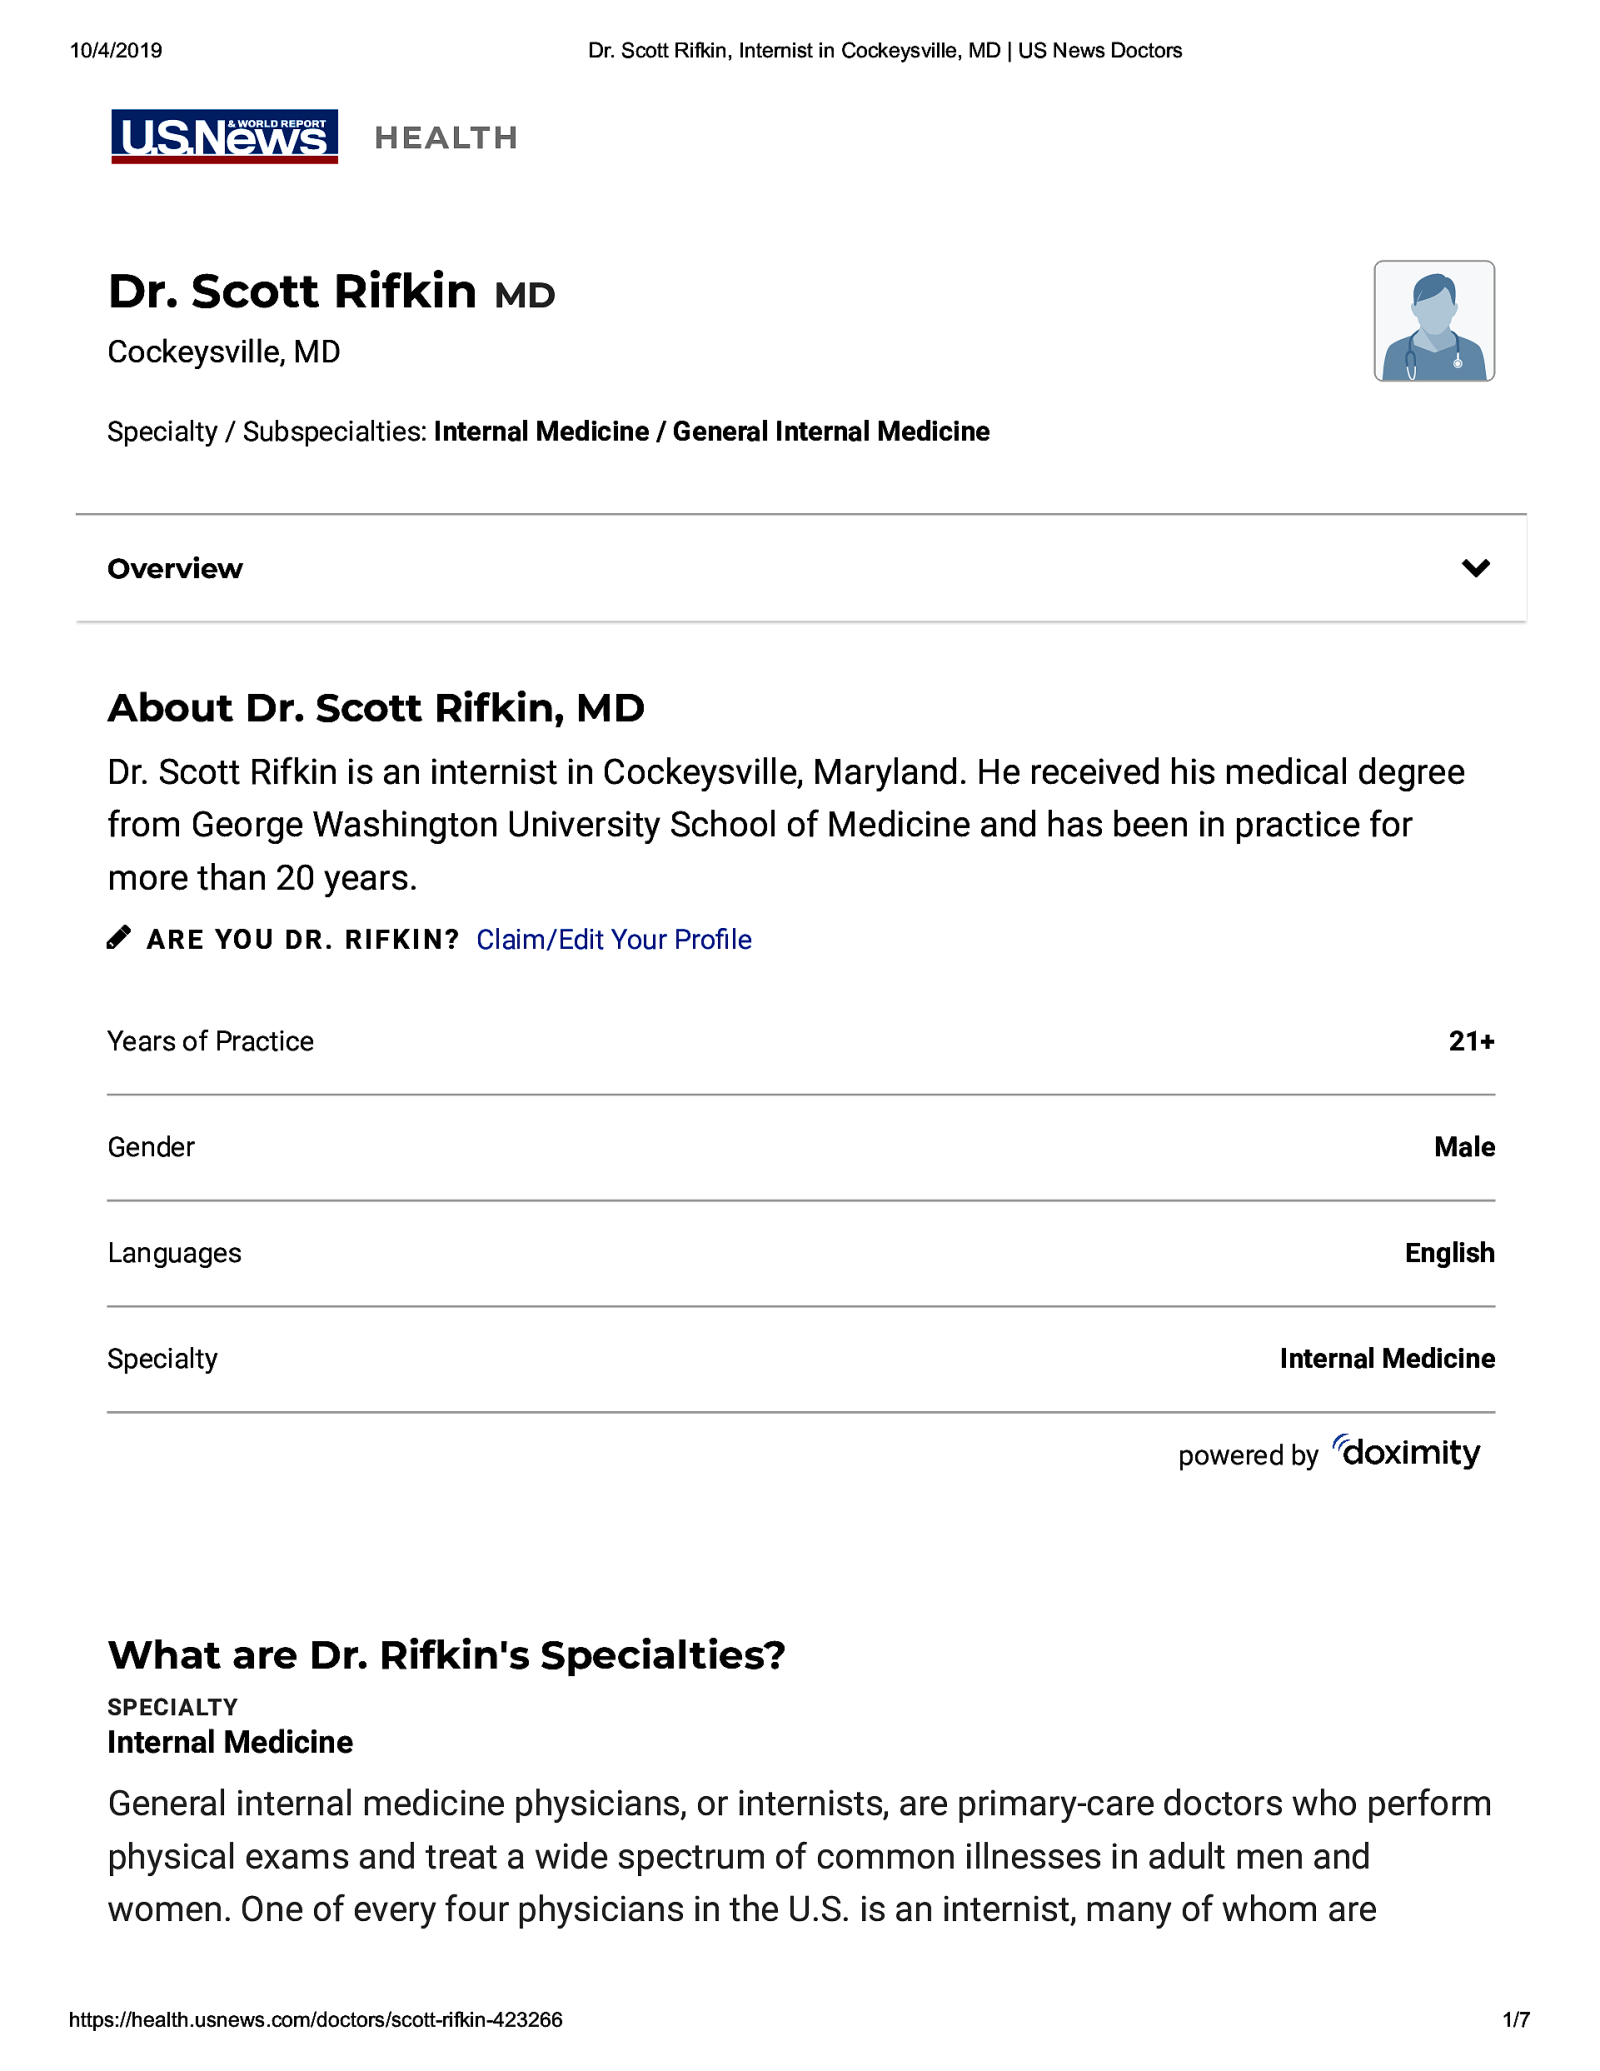 About Dr. Scott Rifkin, MD